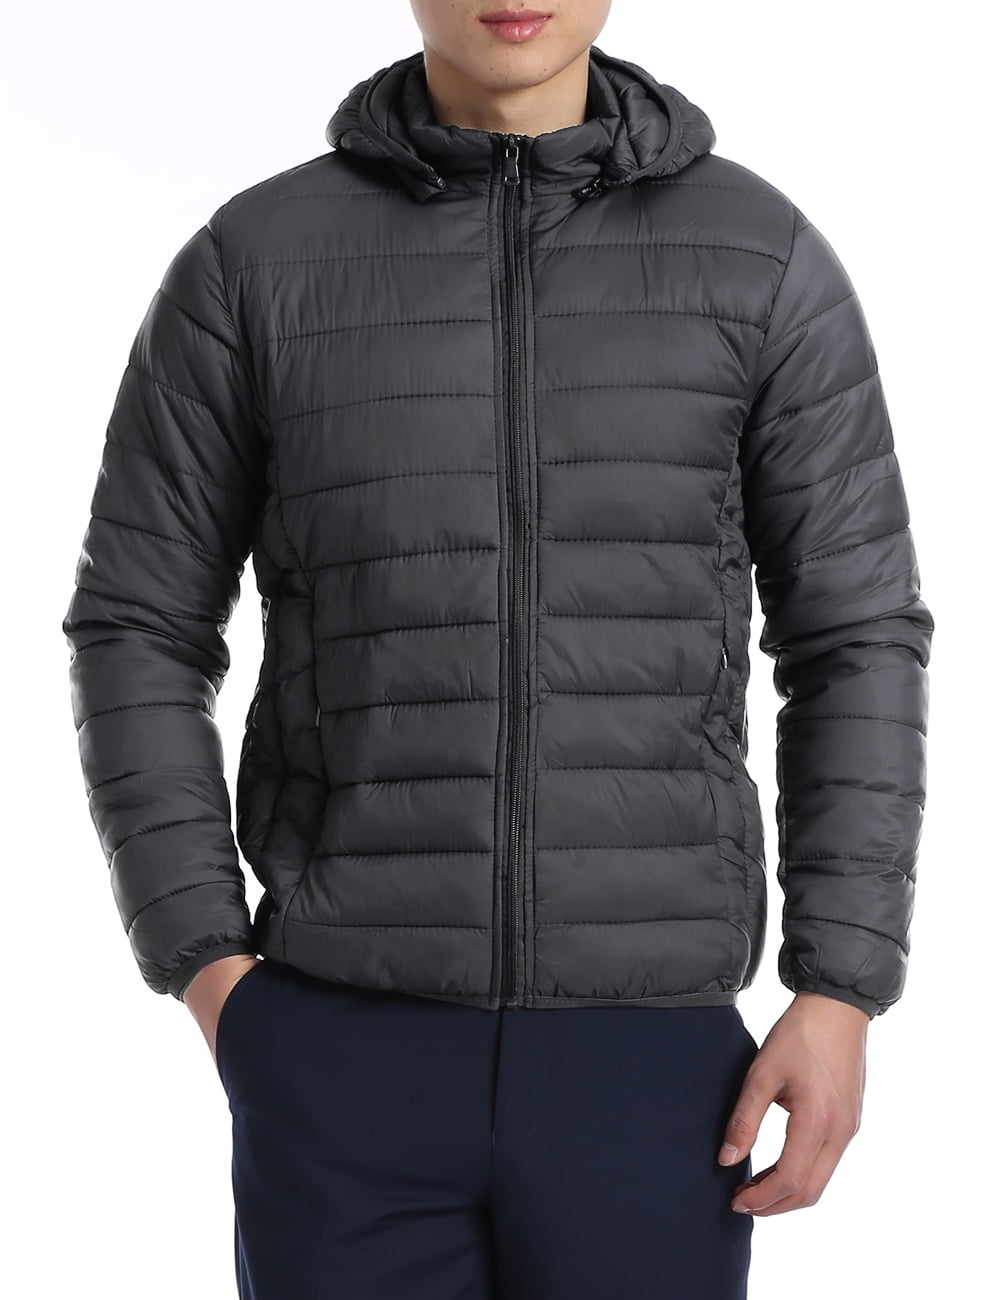 Men's Packable Down Jacket Light Weight Hooded Puffer Coat | Walmart Canada